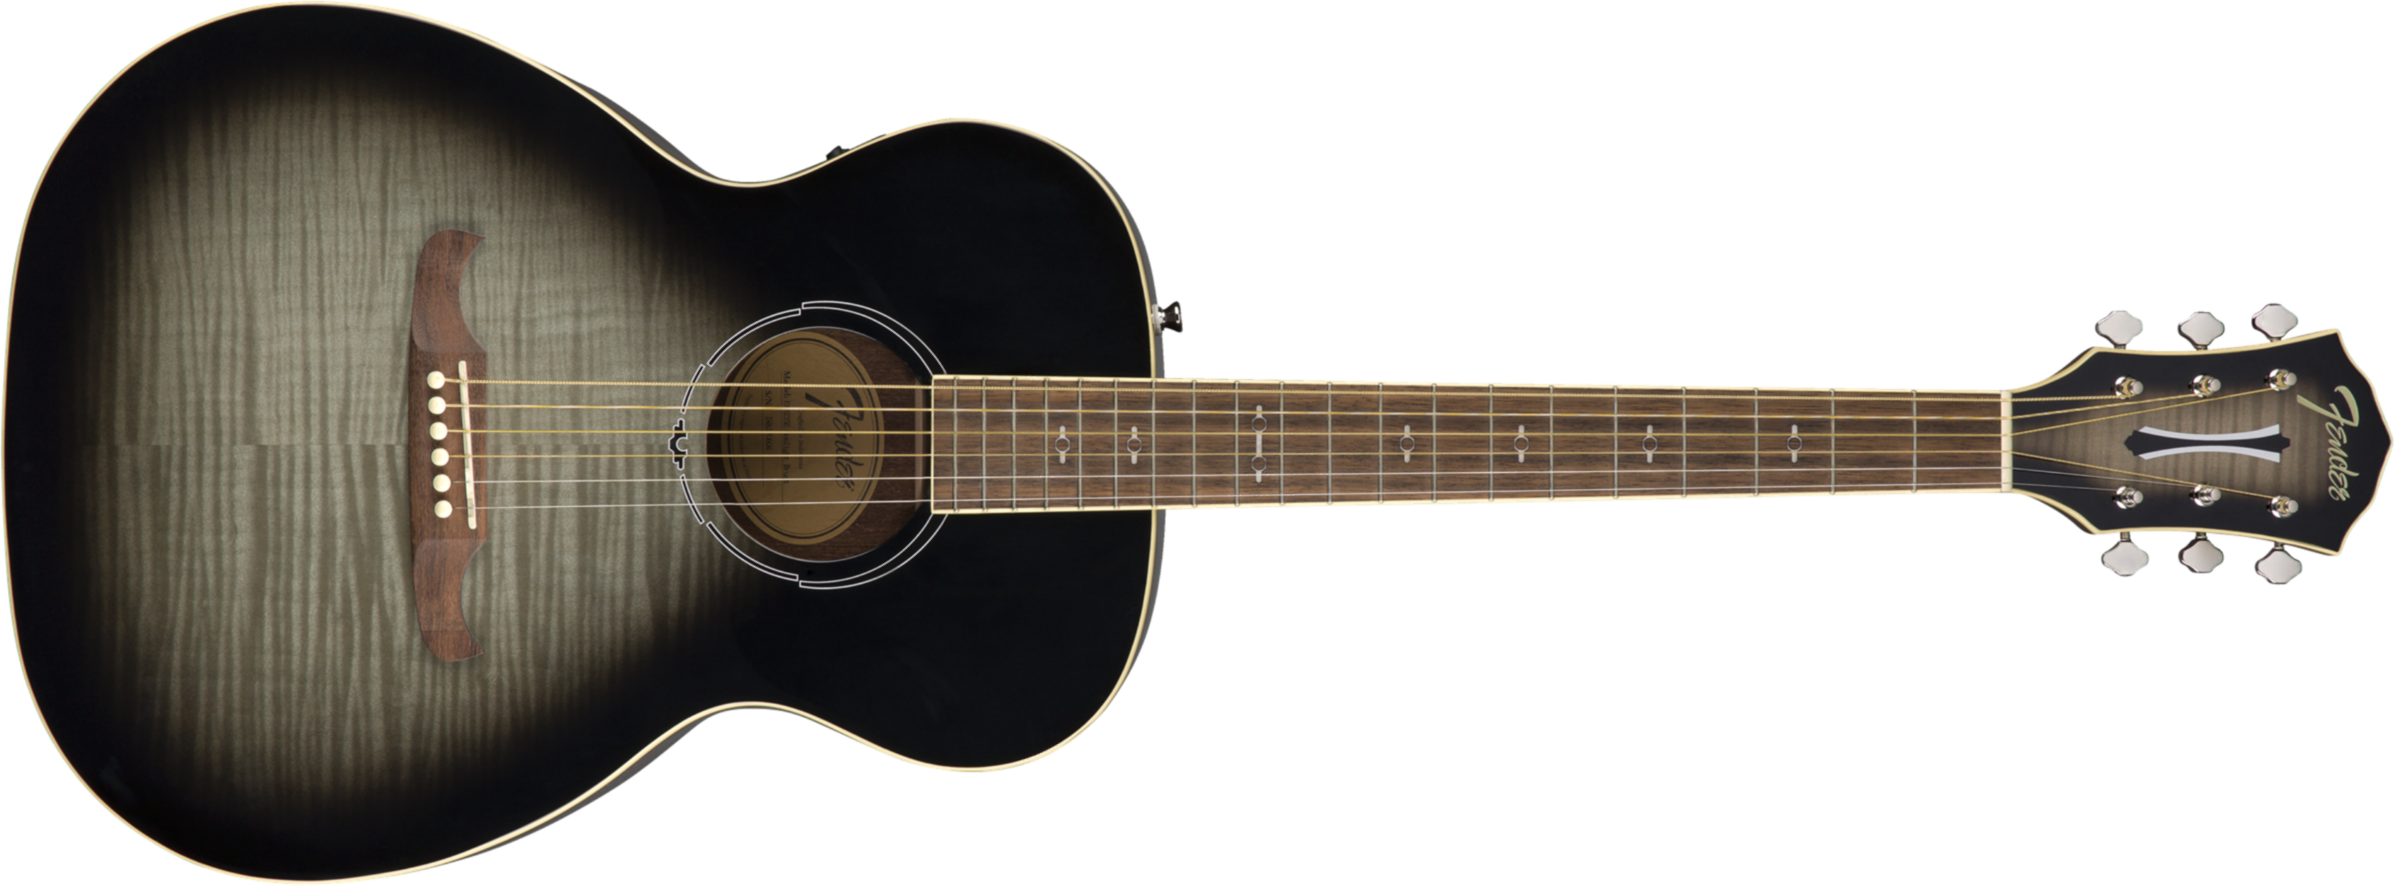 Fender Fa-235e Concert - Moonlight Burst - Electro acoustic guitar - Main picture